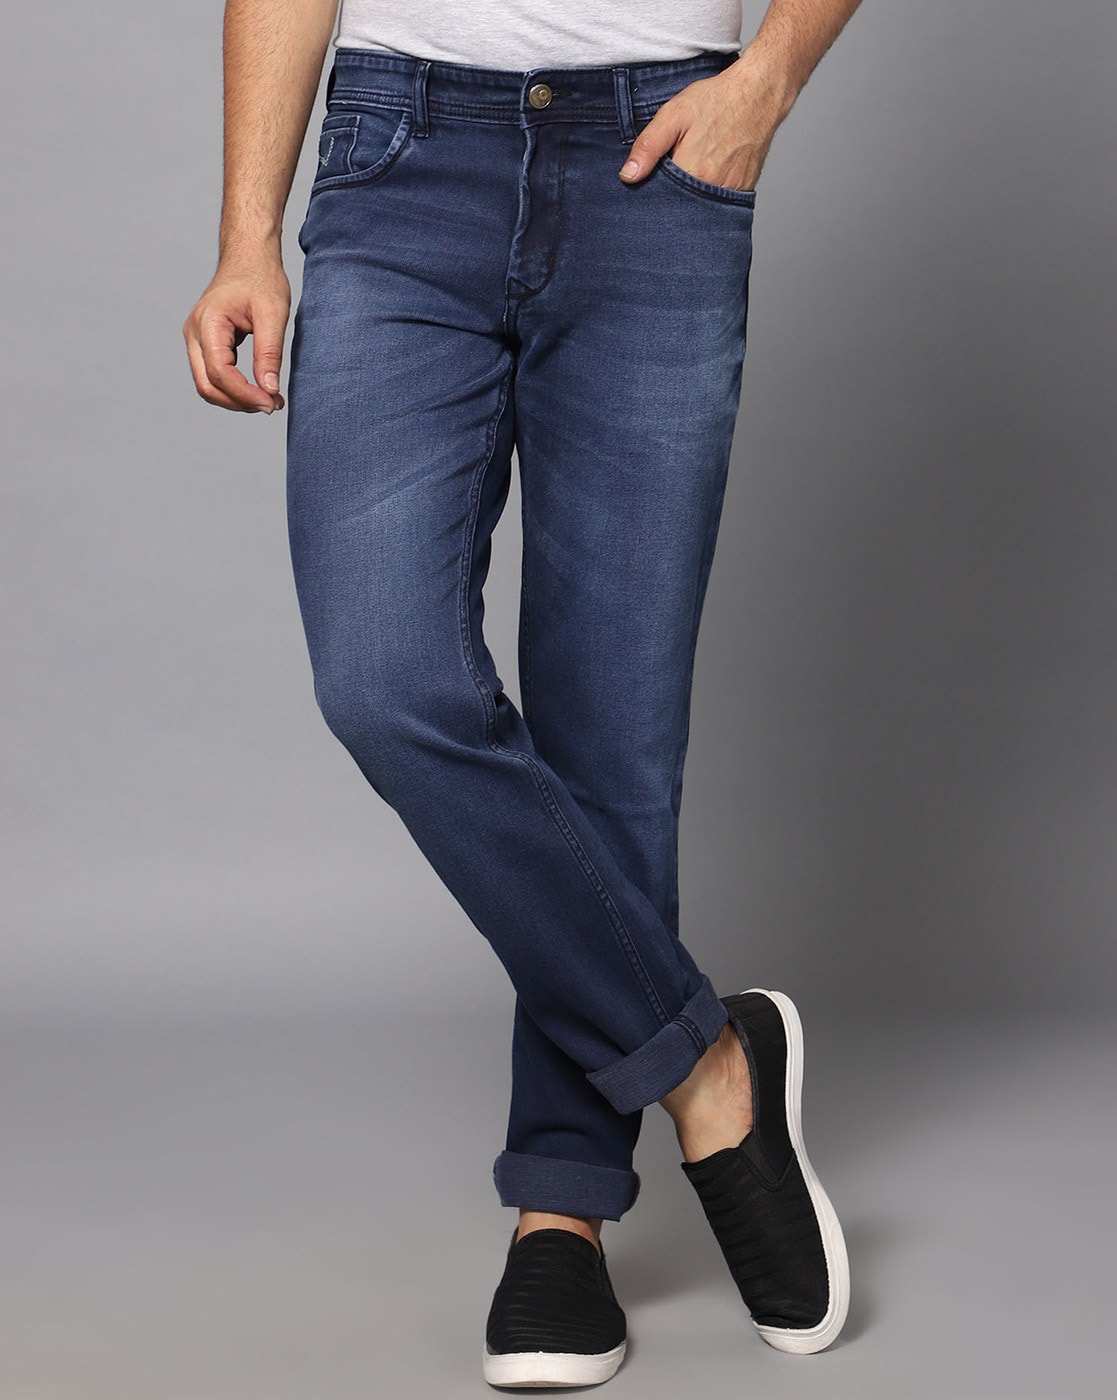 Dark Blue/ Denim Pants Stretchable Straight Cut Jeans for Men | Lazada PH-thephaco.com.vn